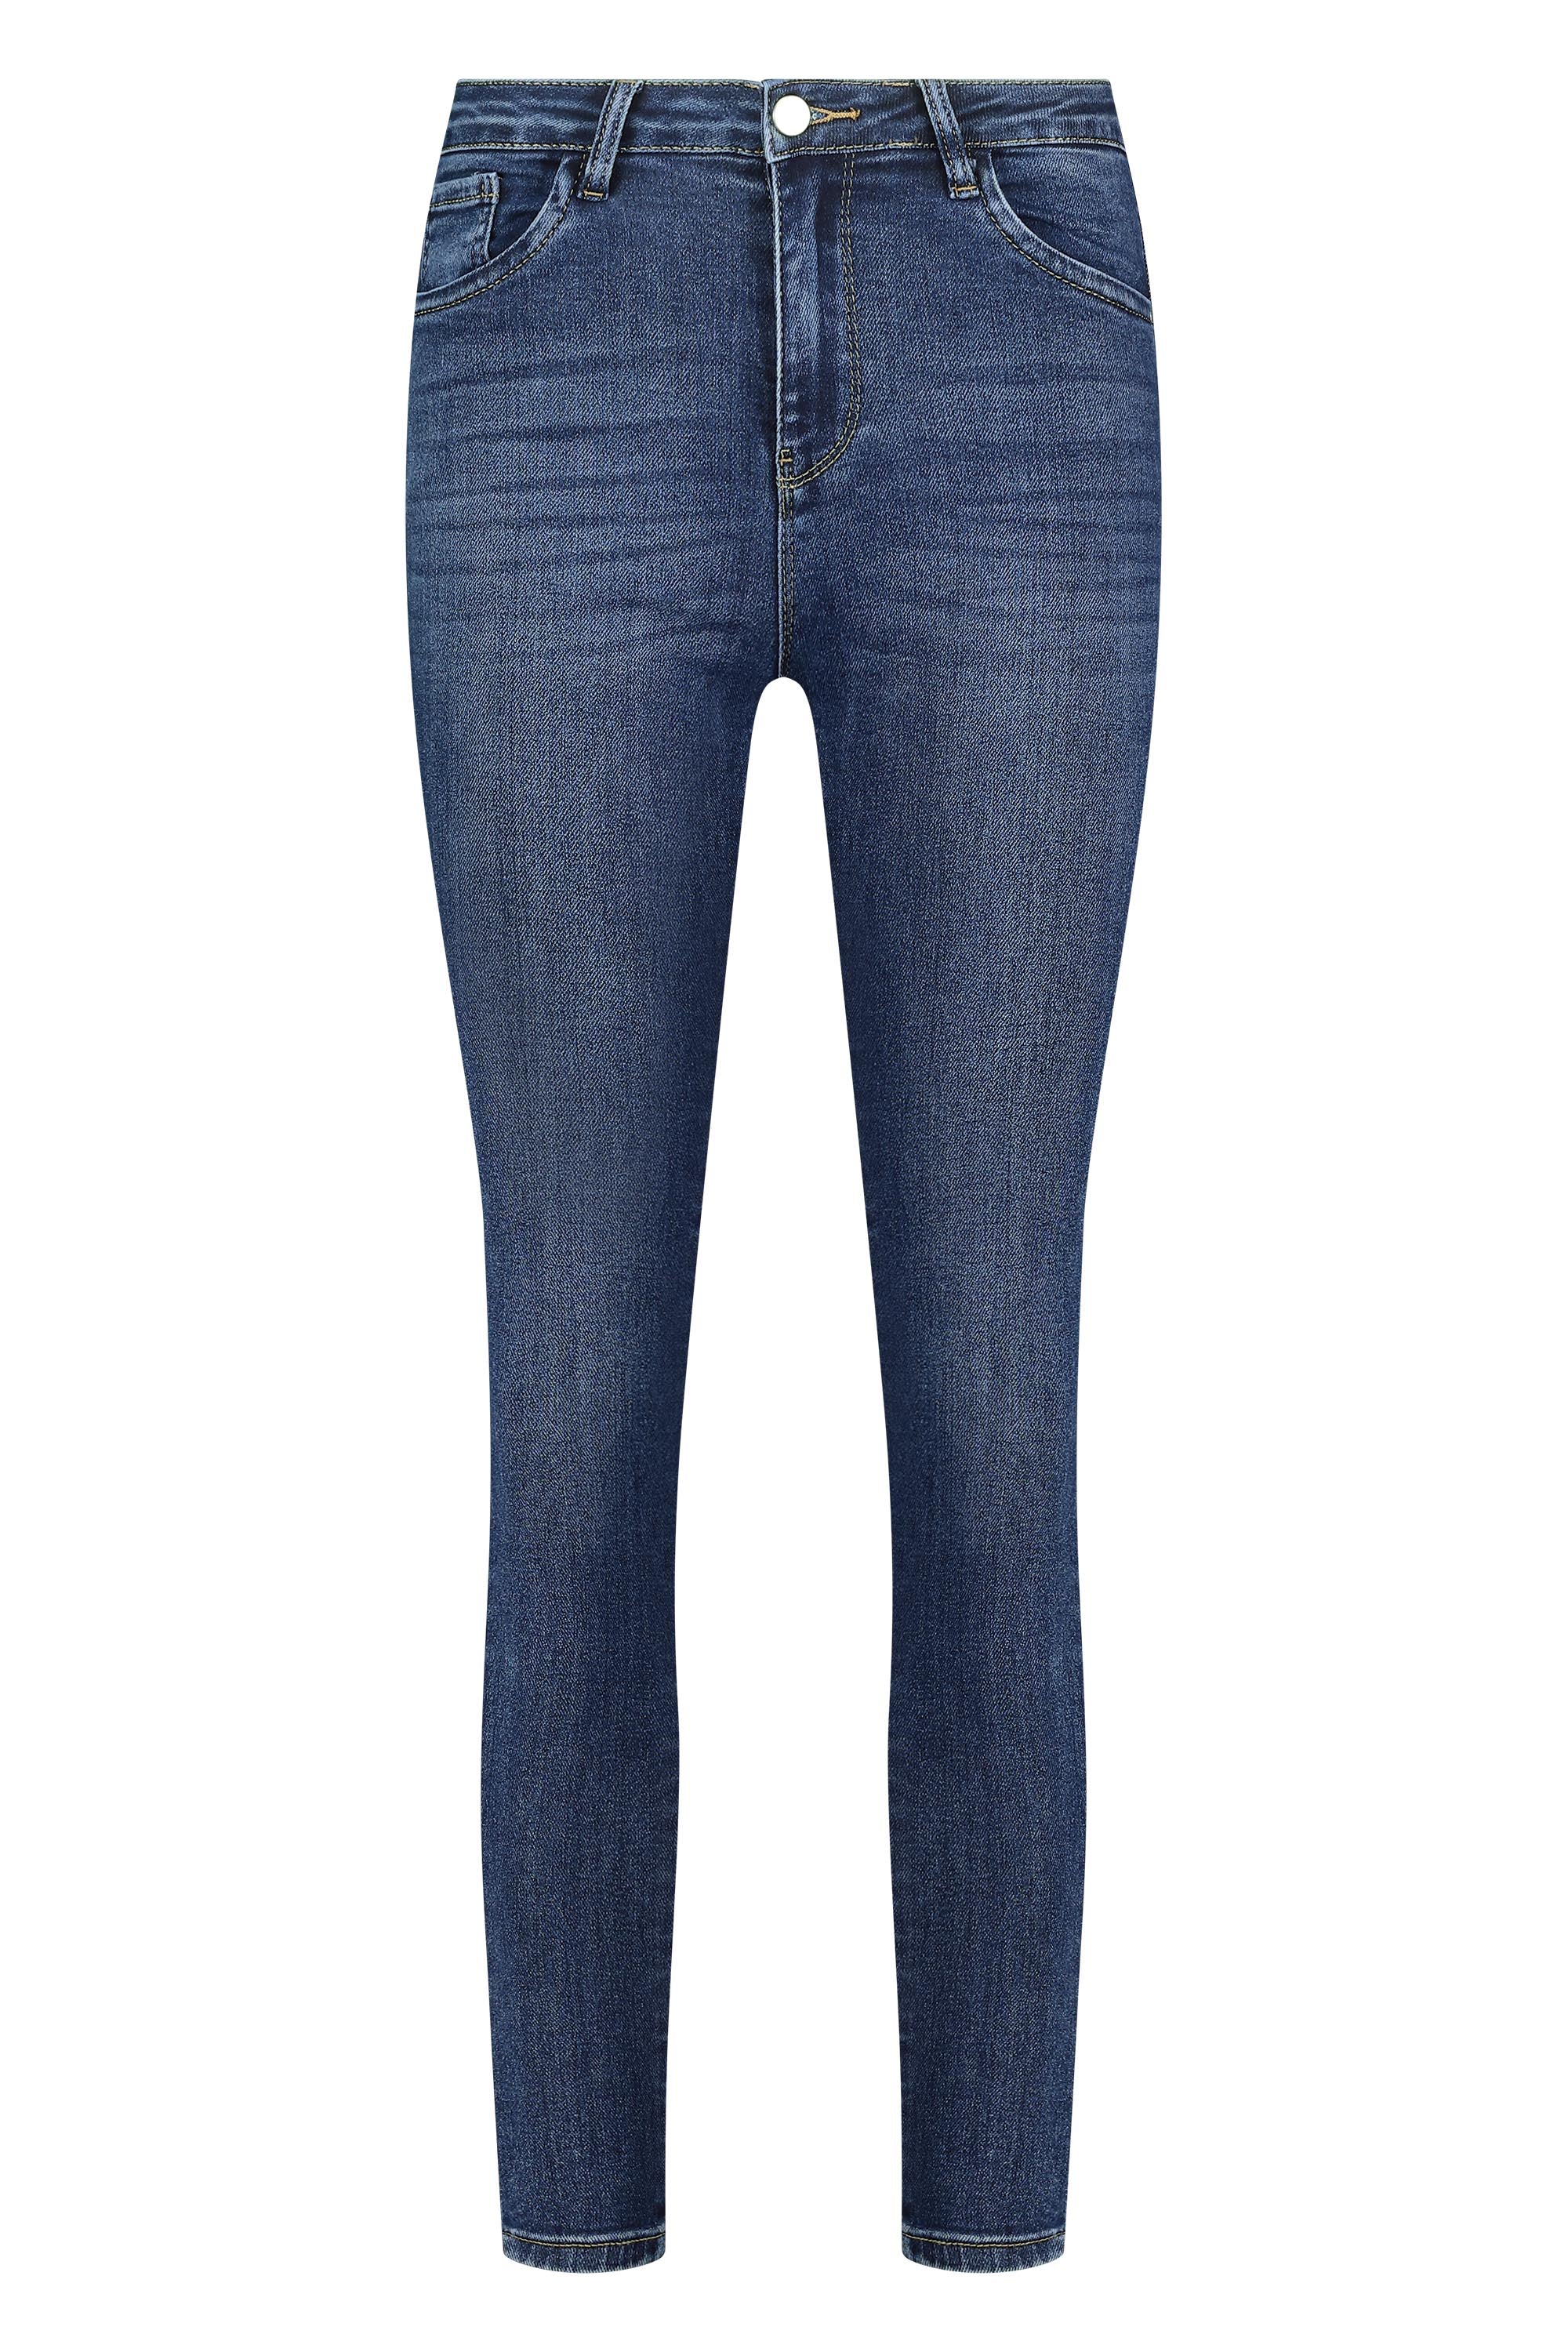 Skinny jeans stretch dark blue